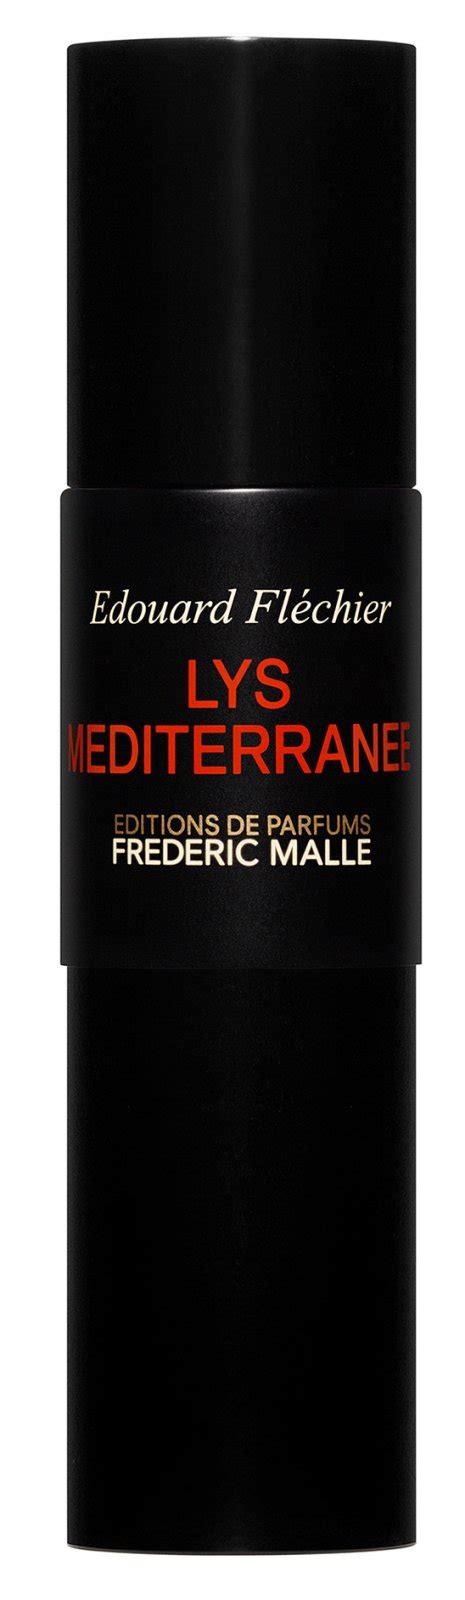 Frederic Malle Lys Mediterranee Eau De Parfum Ingredients